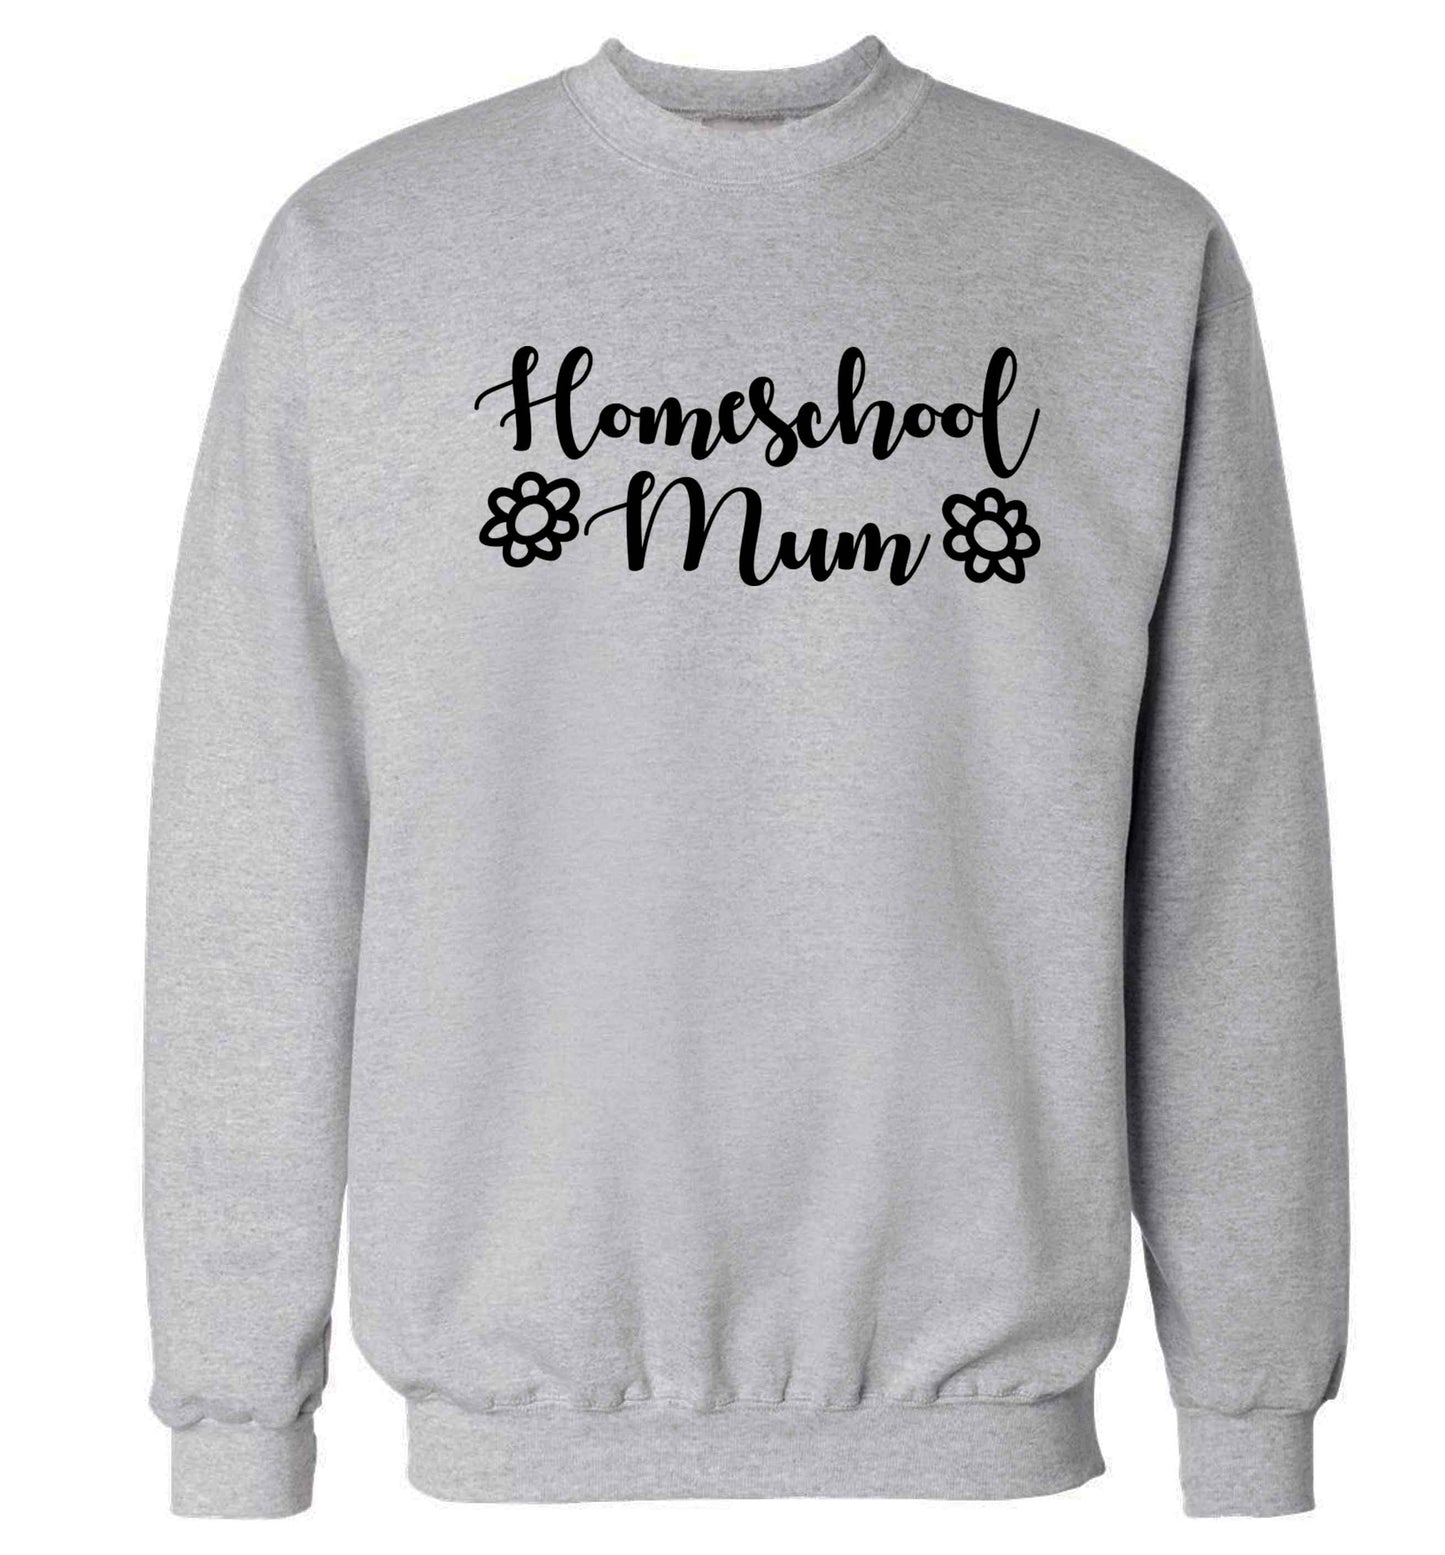 Homeschool mum Adult's unisex grey Sweater 2XL